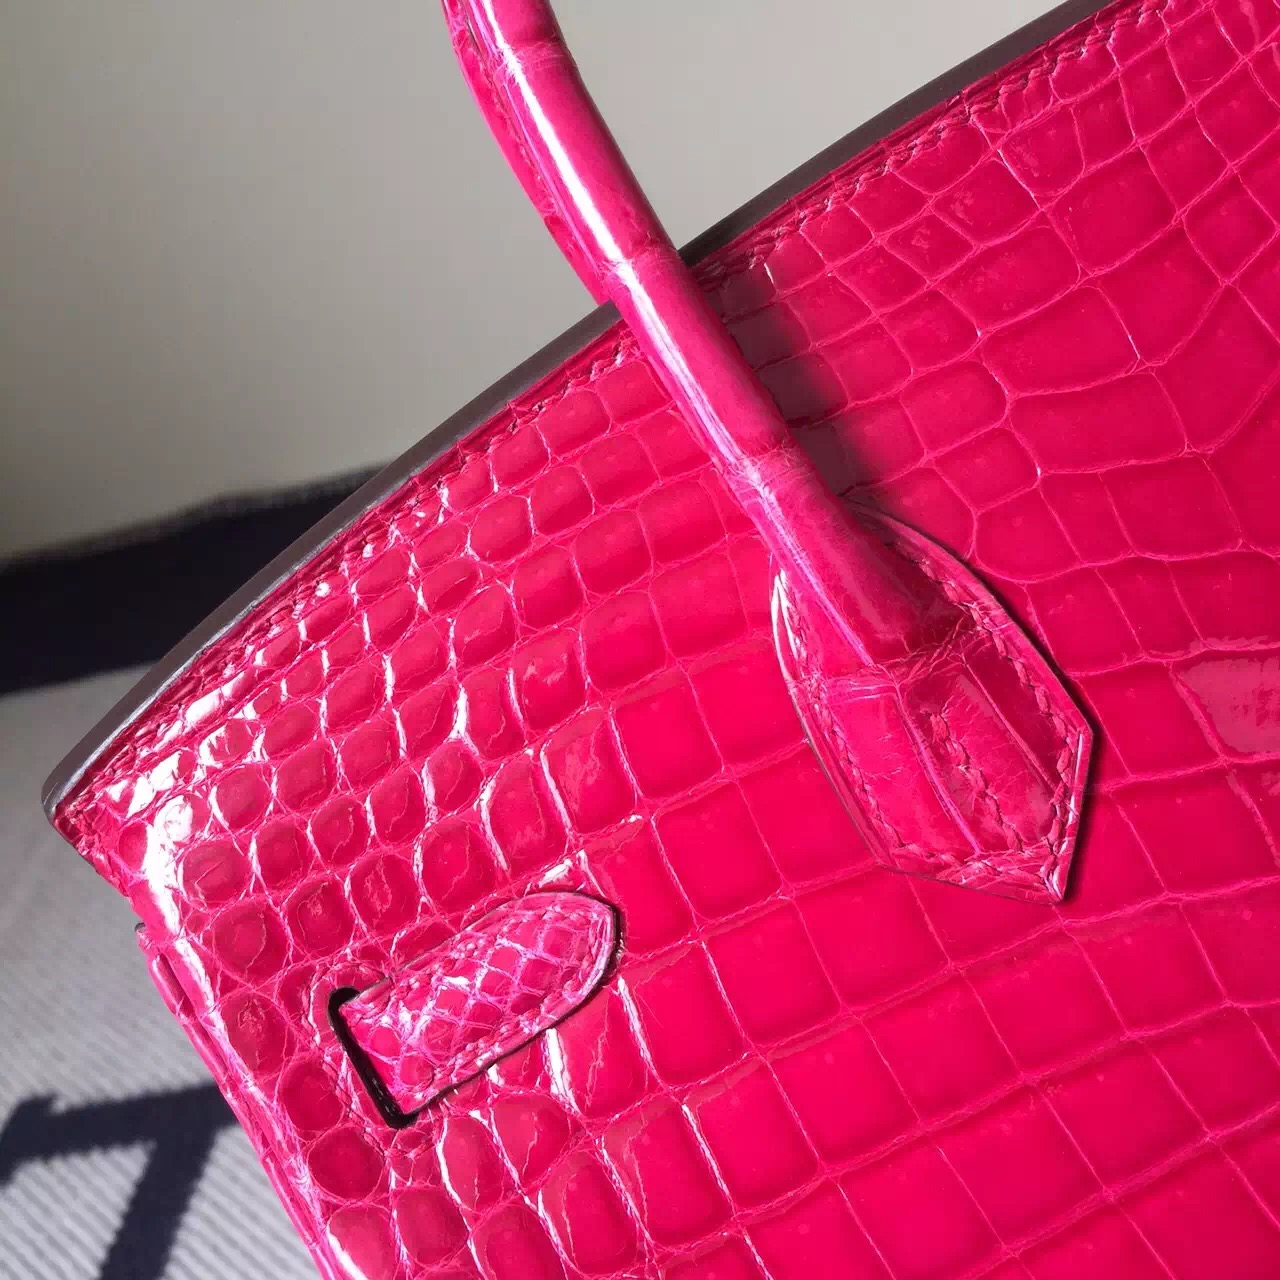 Sale Hermes Hot Pink Crocodile Shiny Leather Birkin Bag 25cm